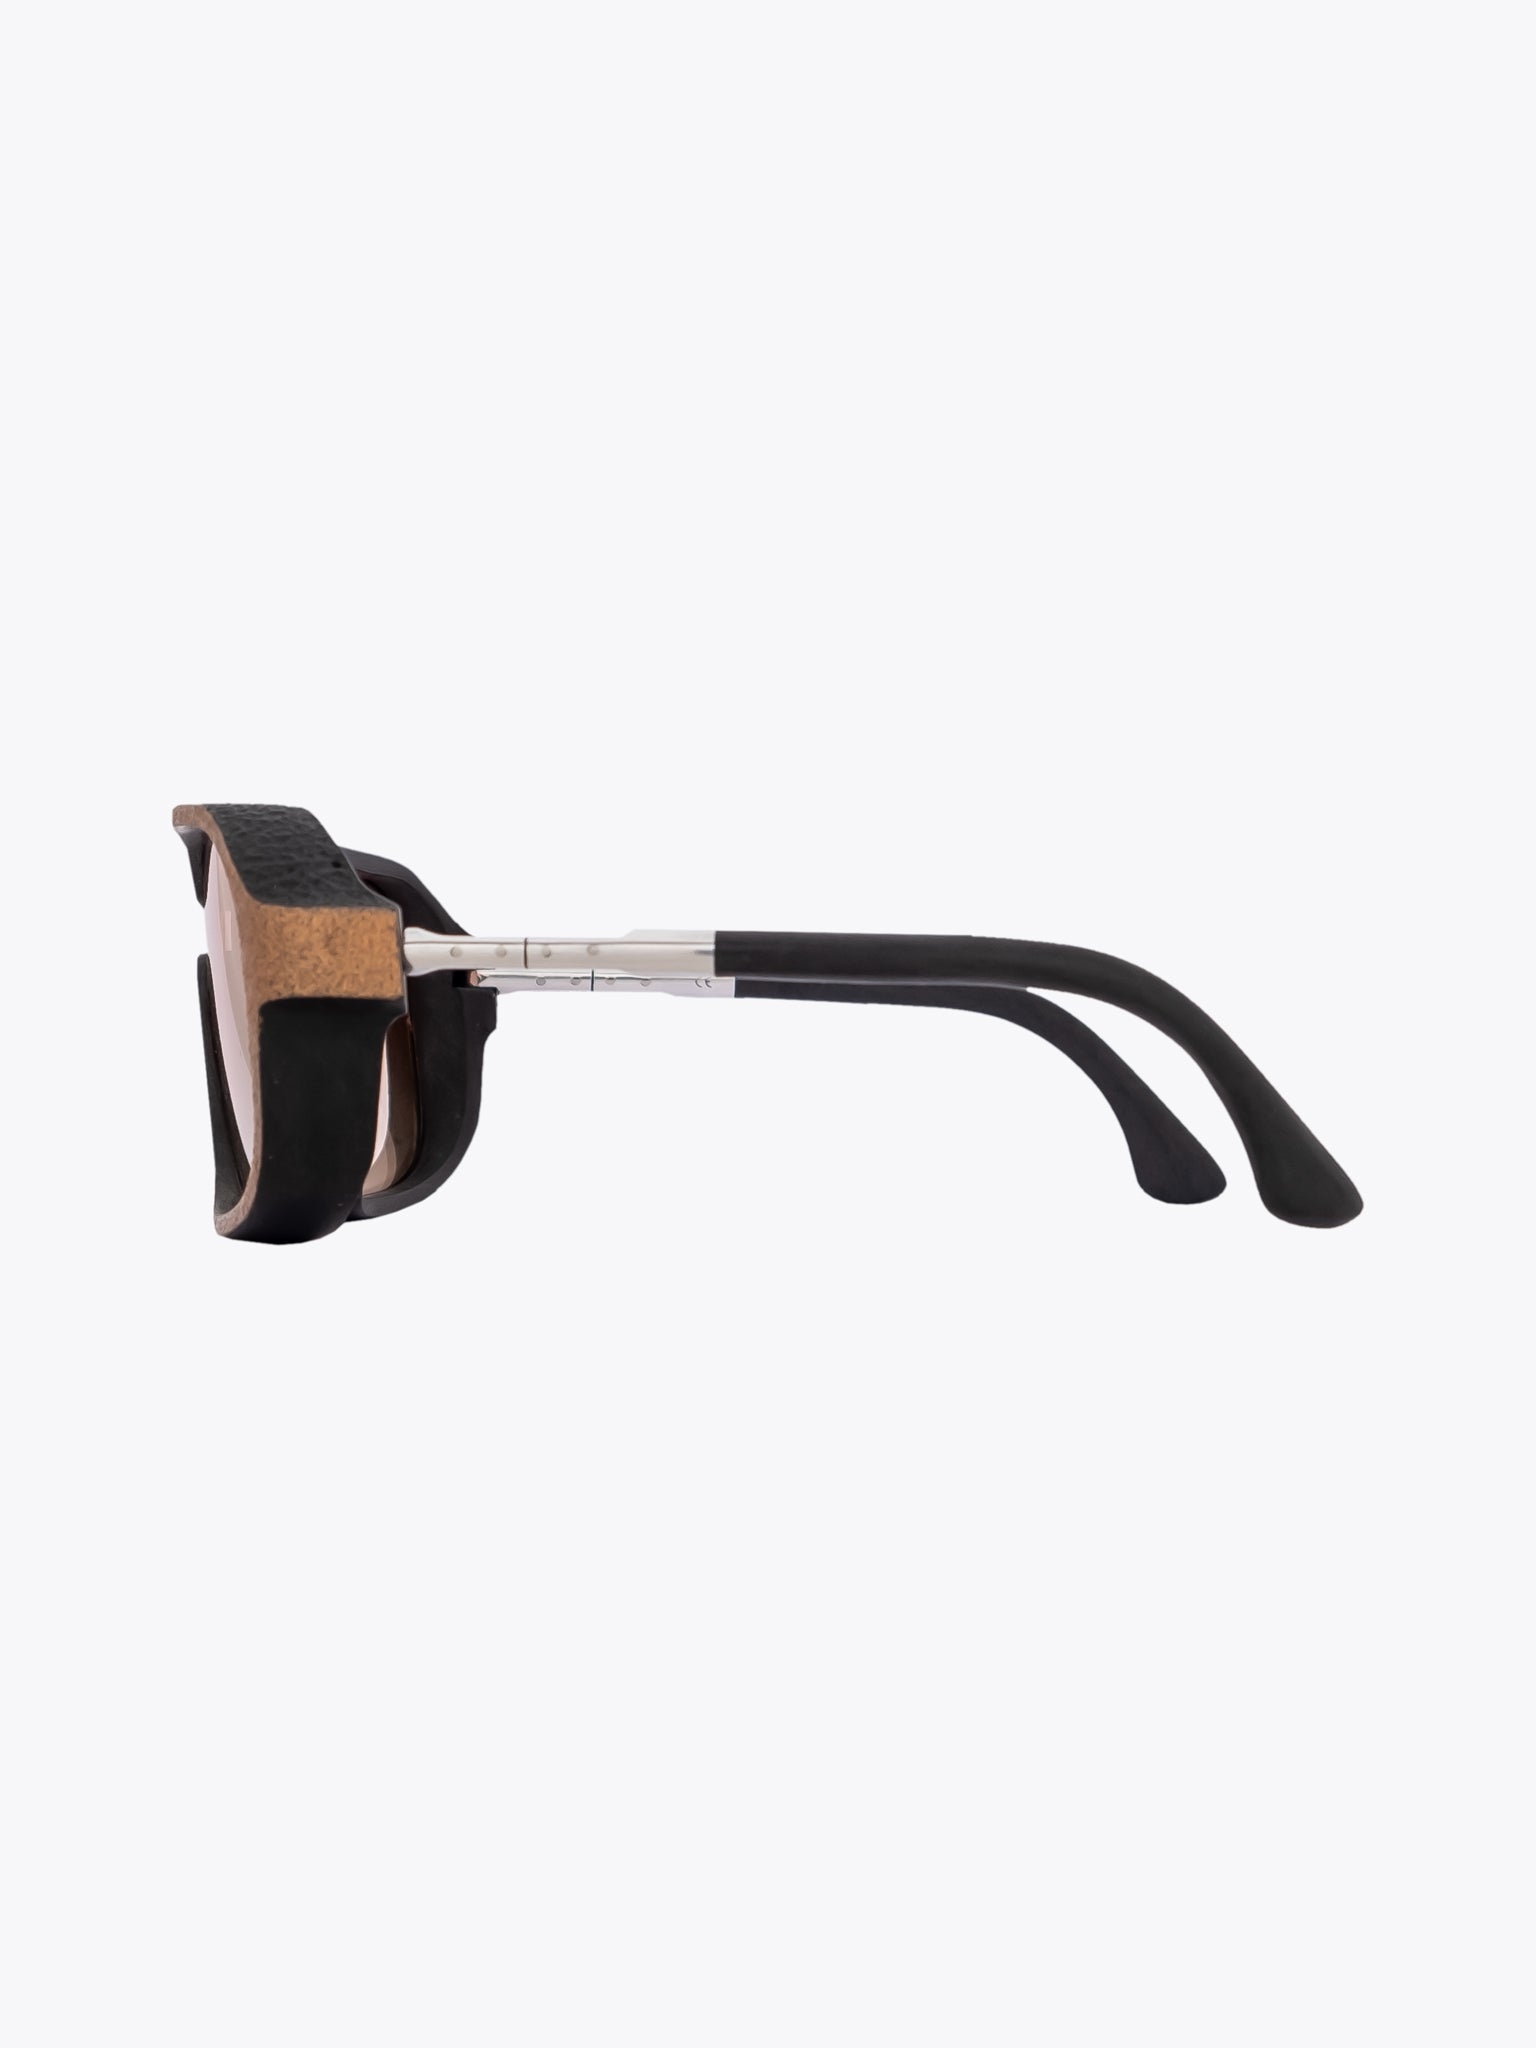 IMPURI Super Recycled Carbon Sunglasses Bronze